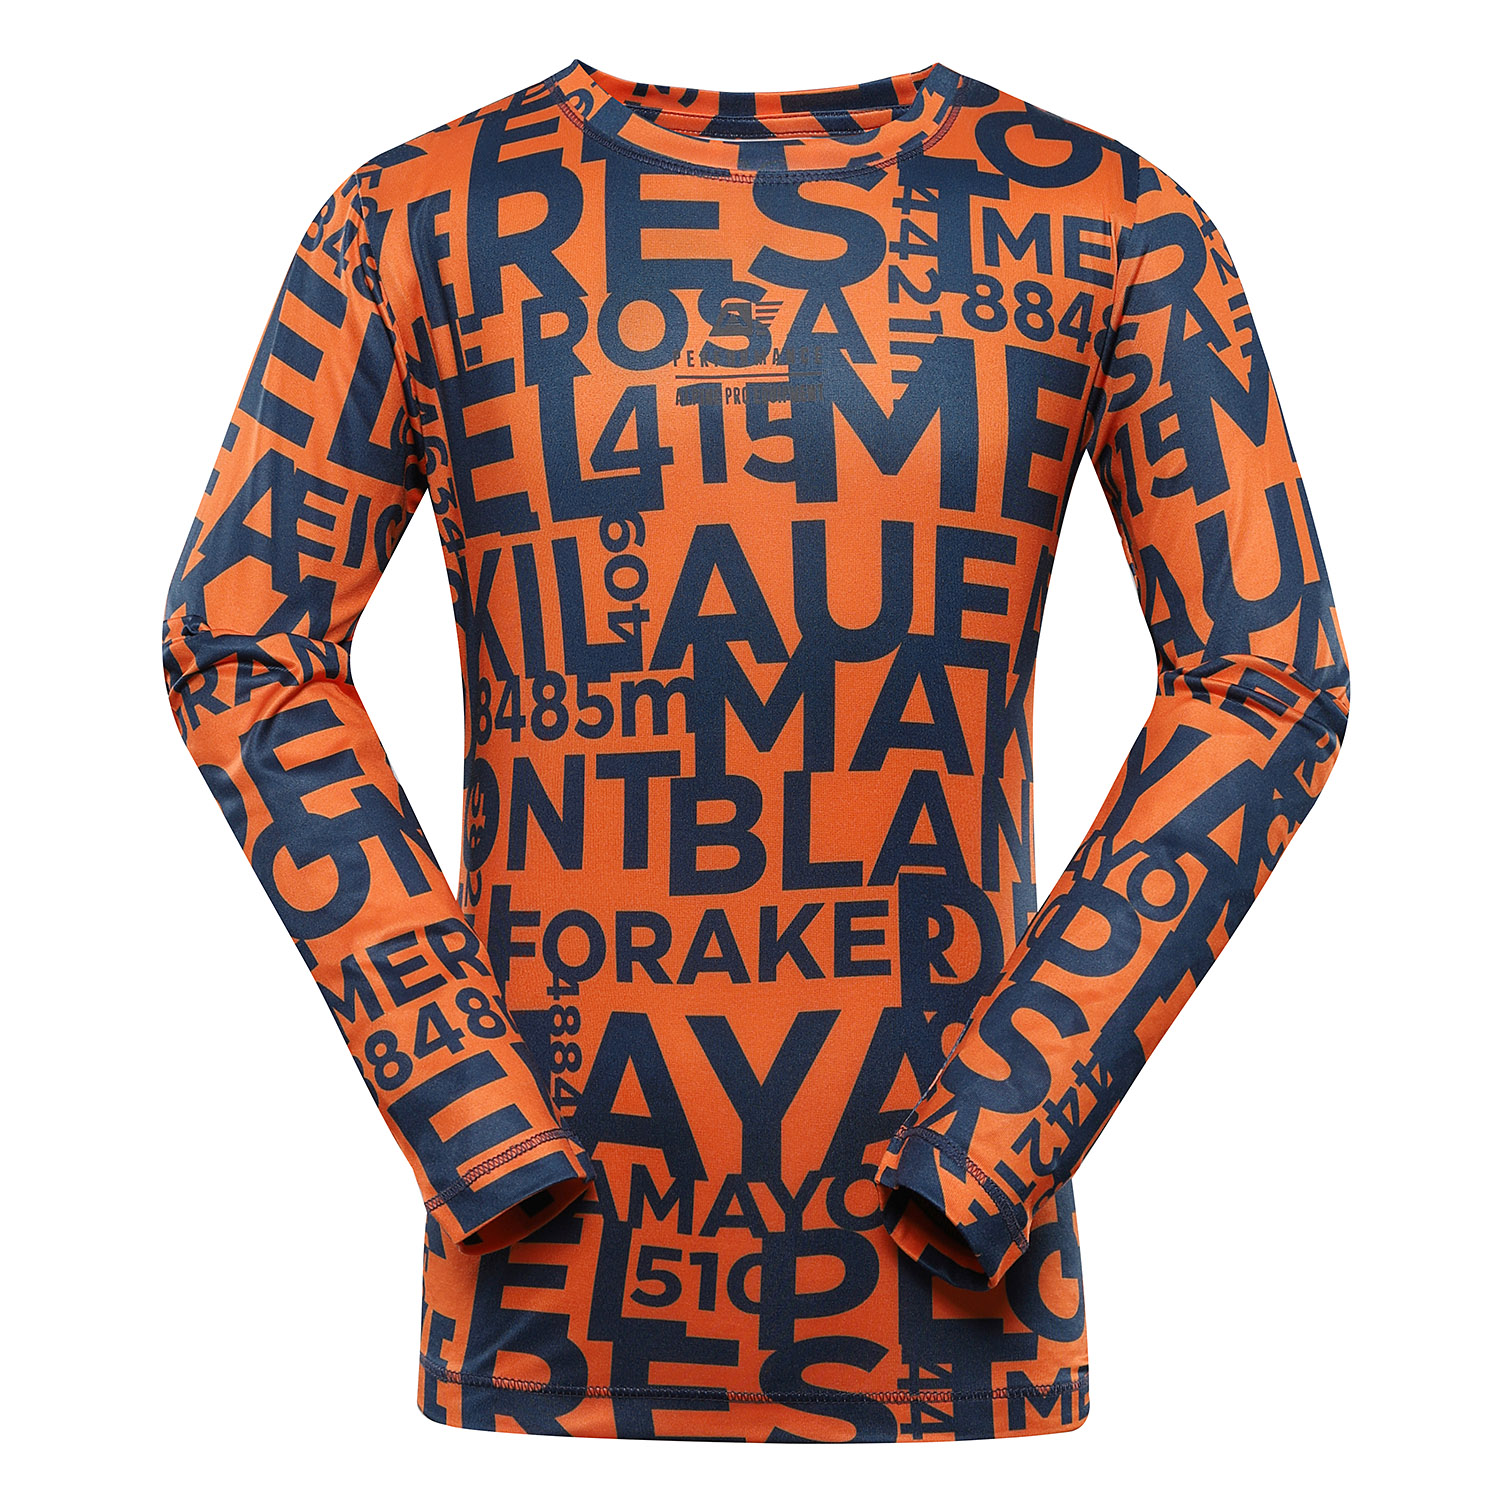 Children's quick-drying T-shirt ALPINE PRO LOUSO orange tiger variant pb